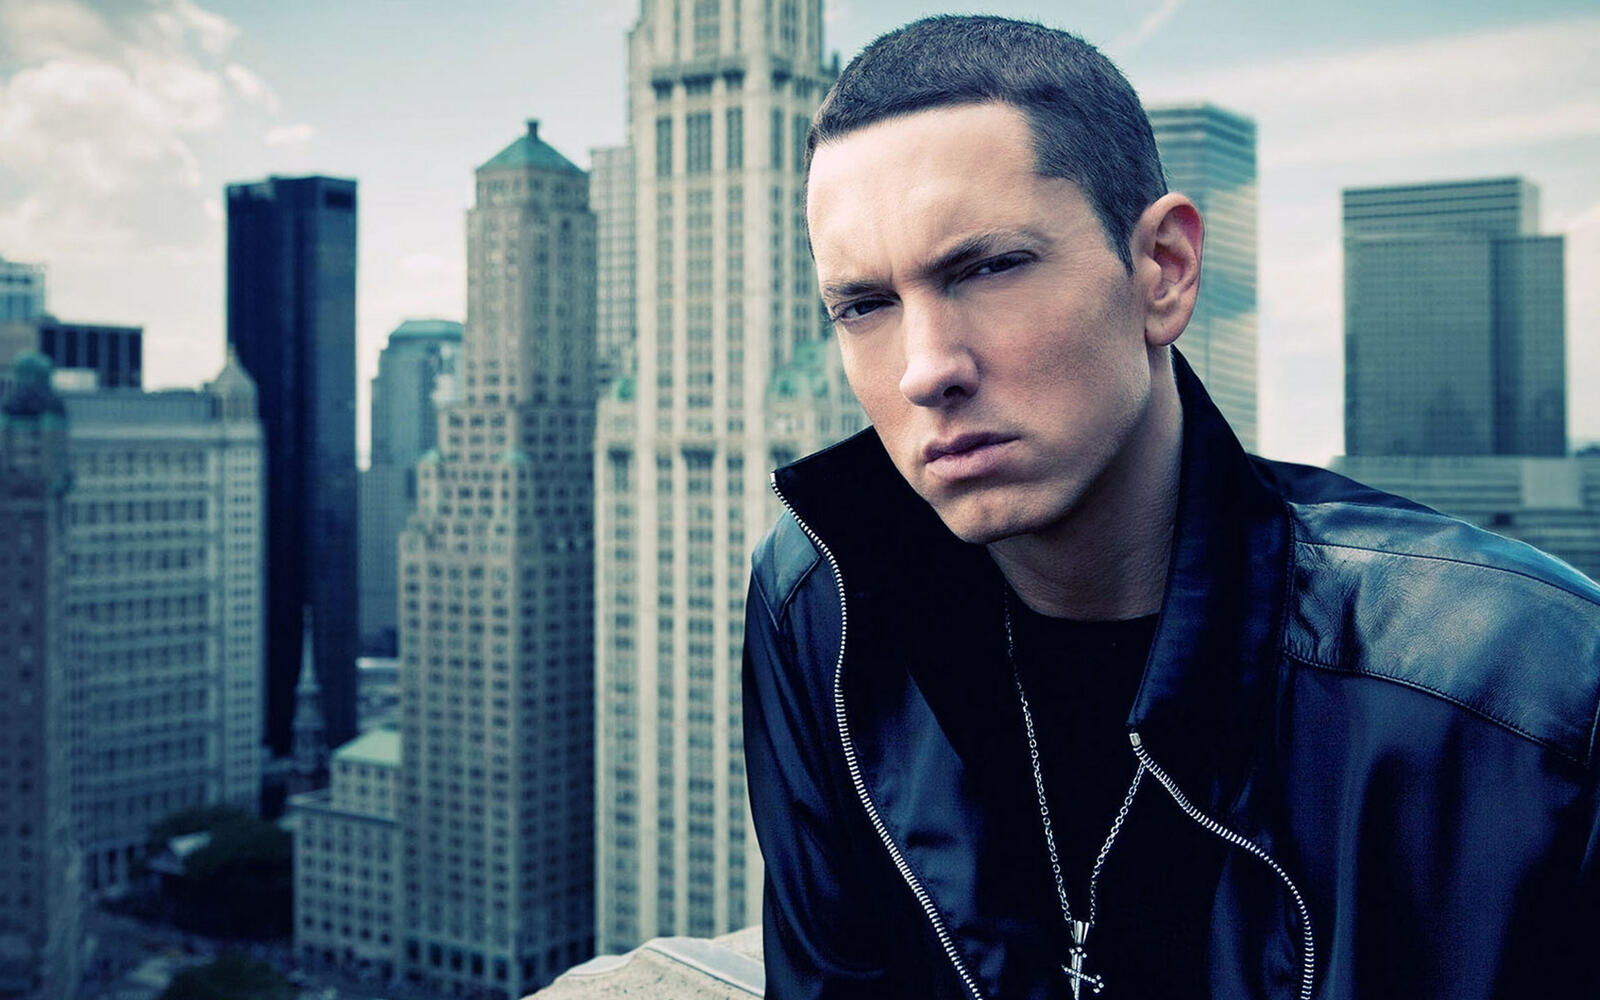 Wallpapers Eminem city home on the desktop